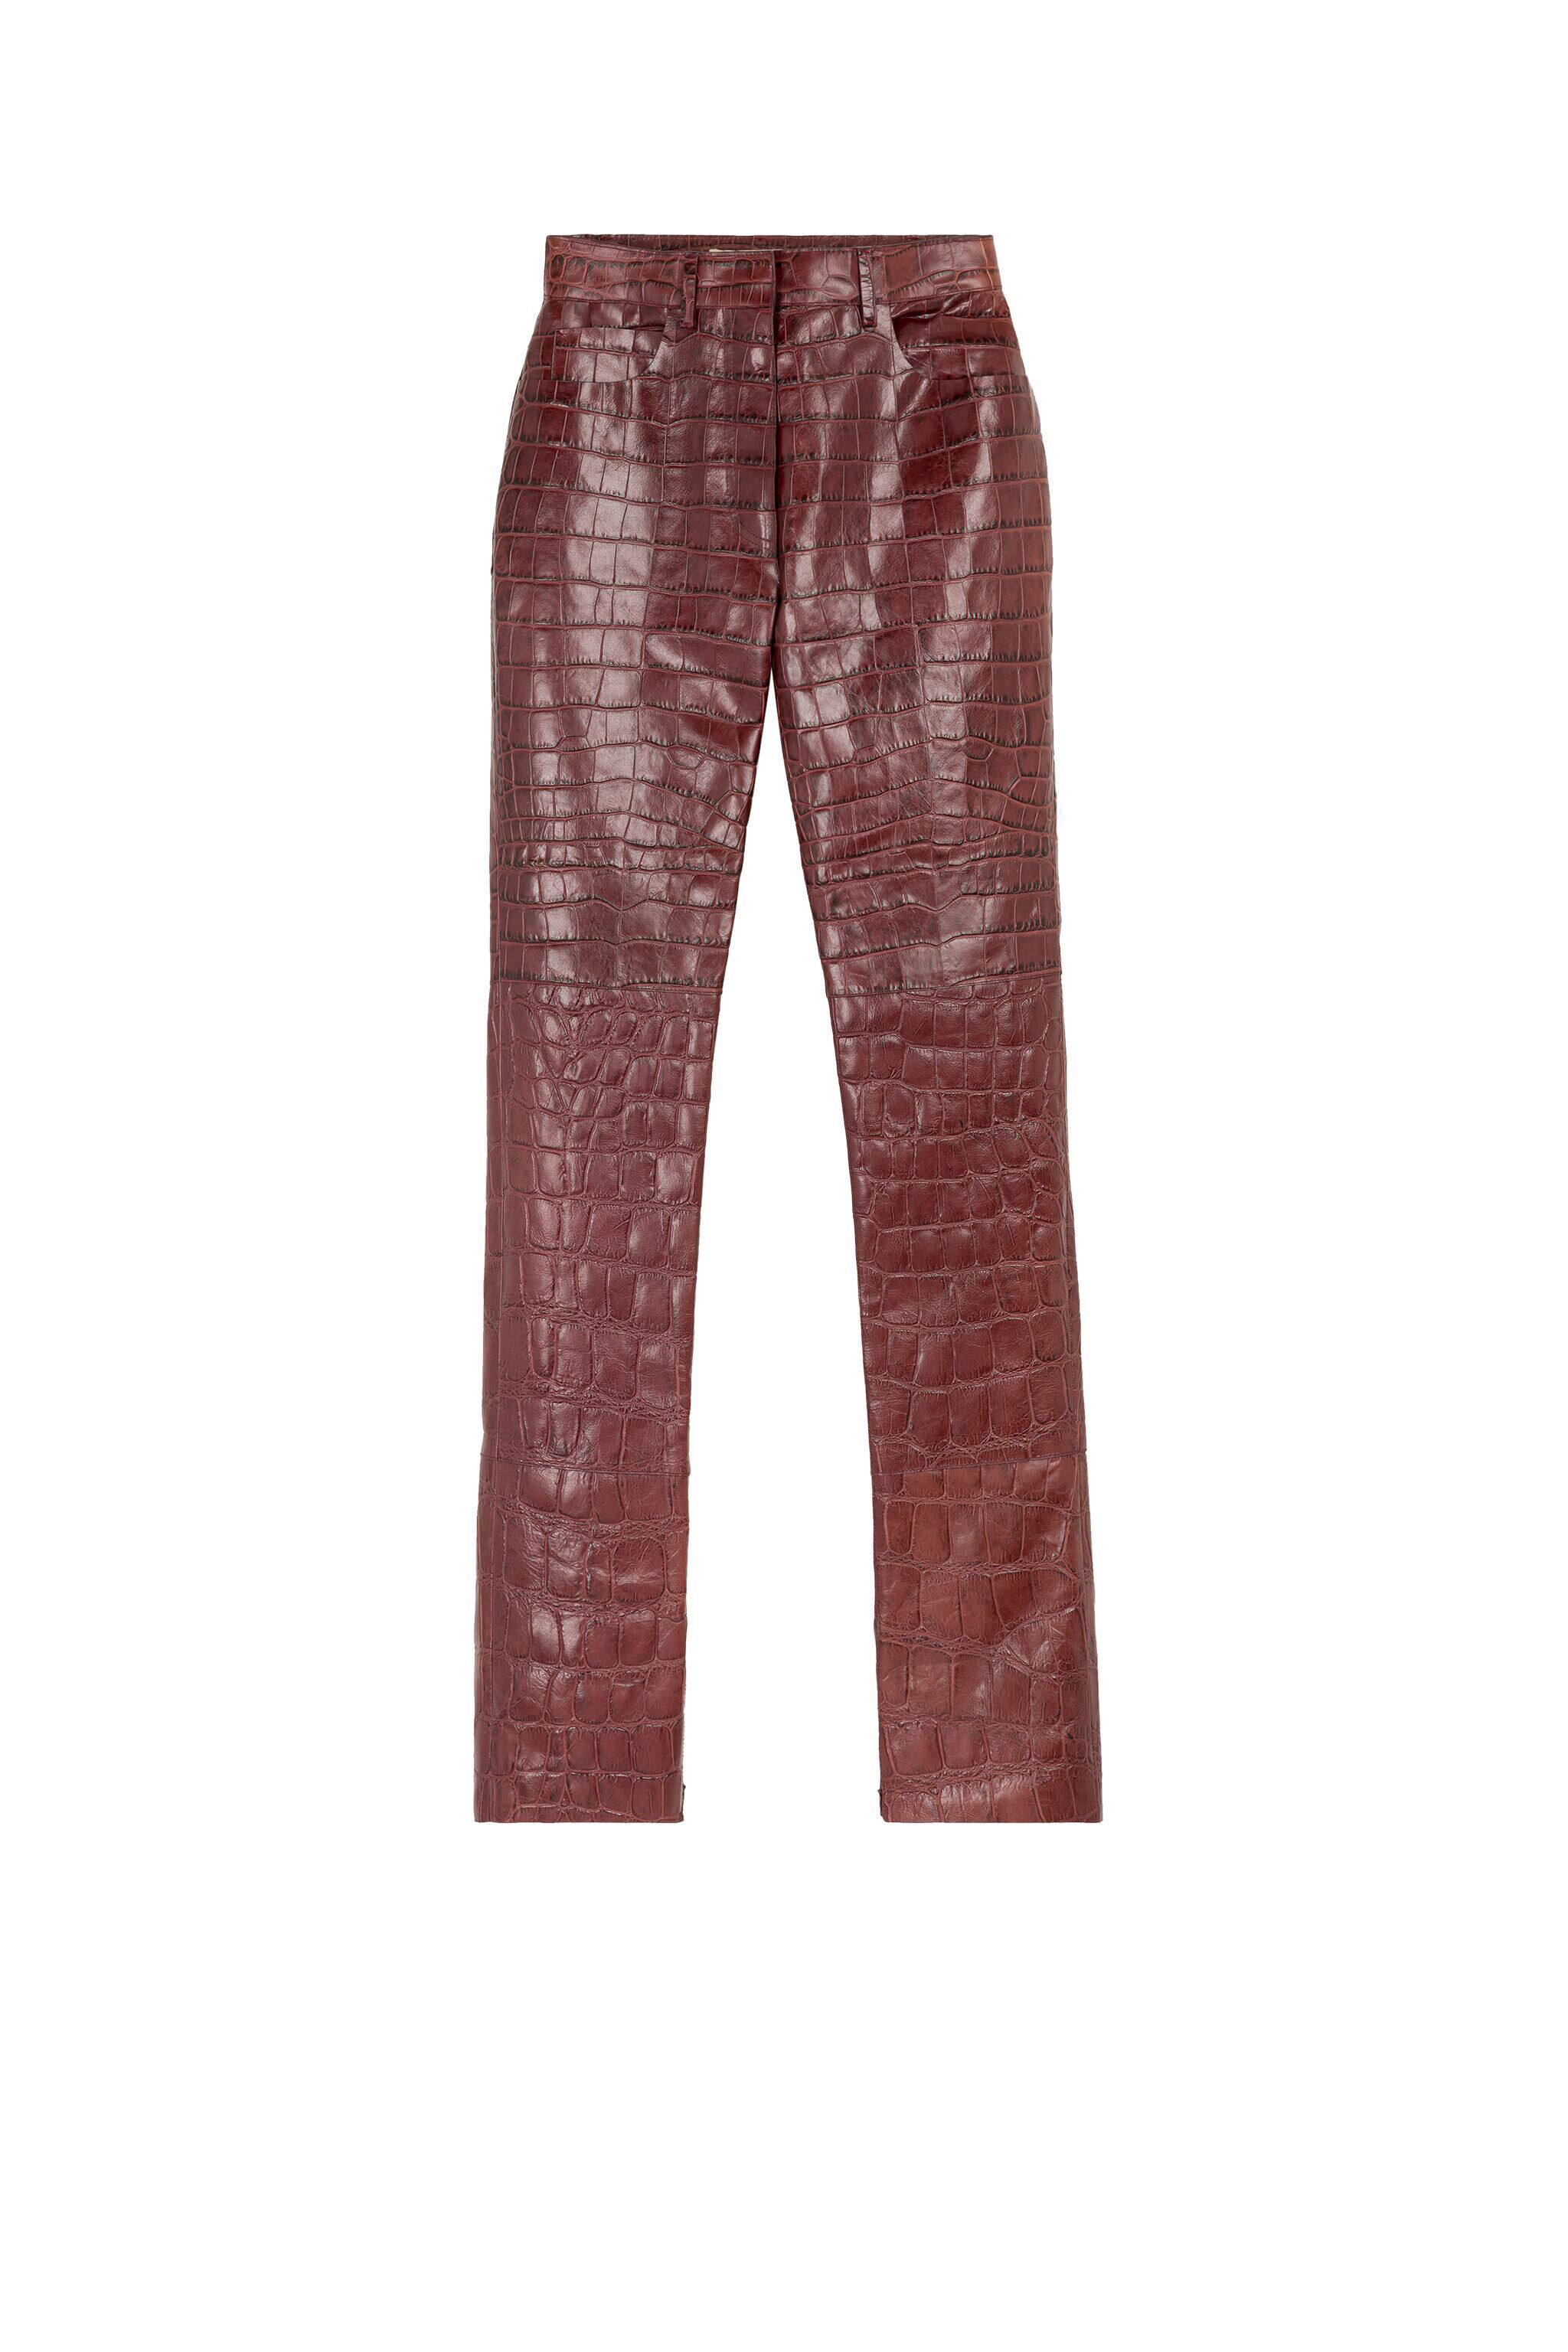 Roberto Cavalli Croc Print Satin Trousers in Gray | Lyst